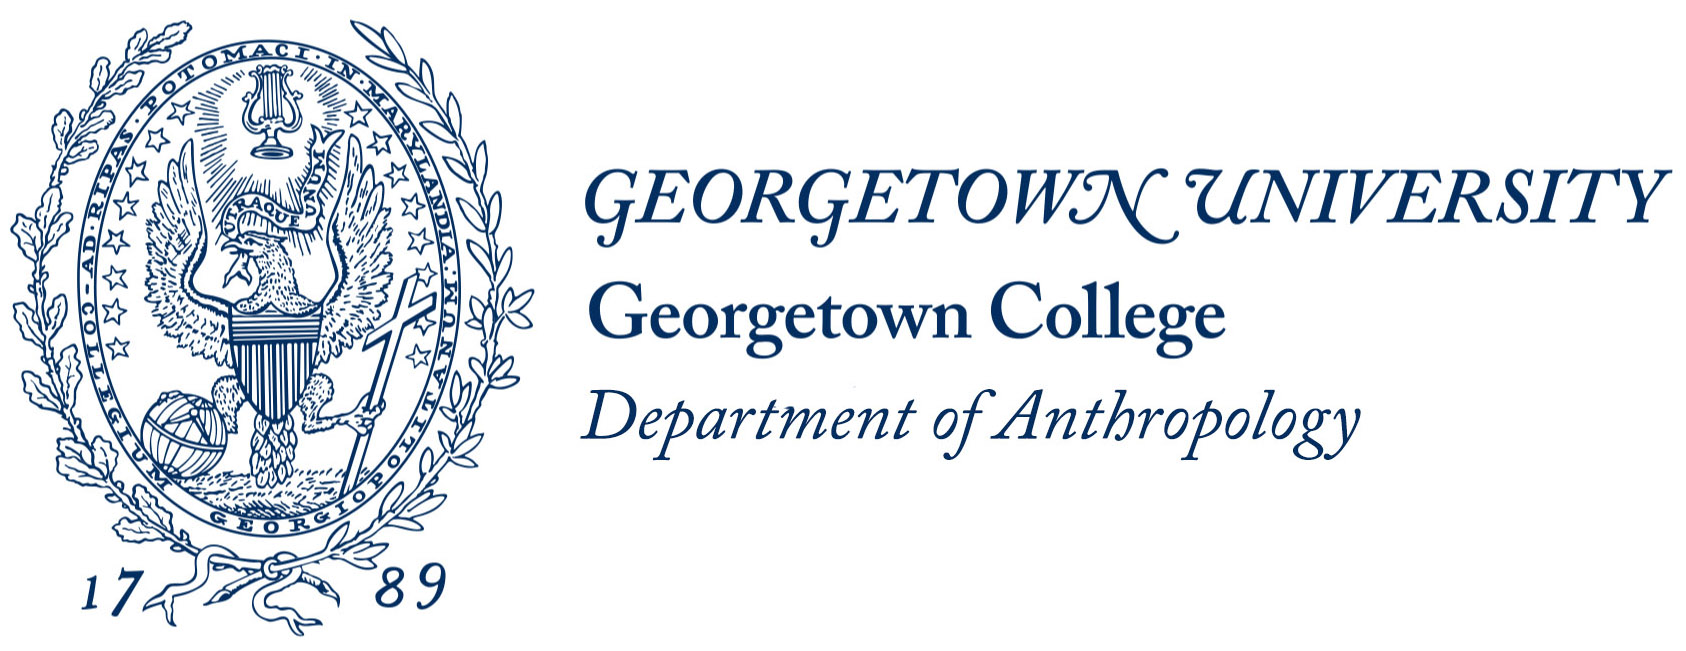 Georgetown University Department of Anthropology logo